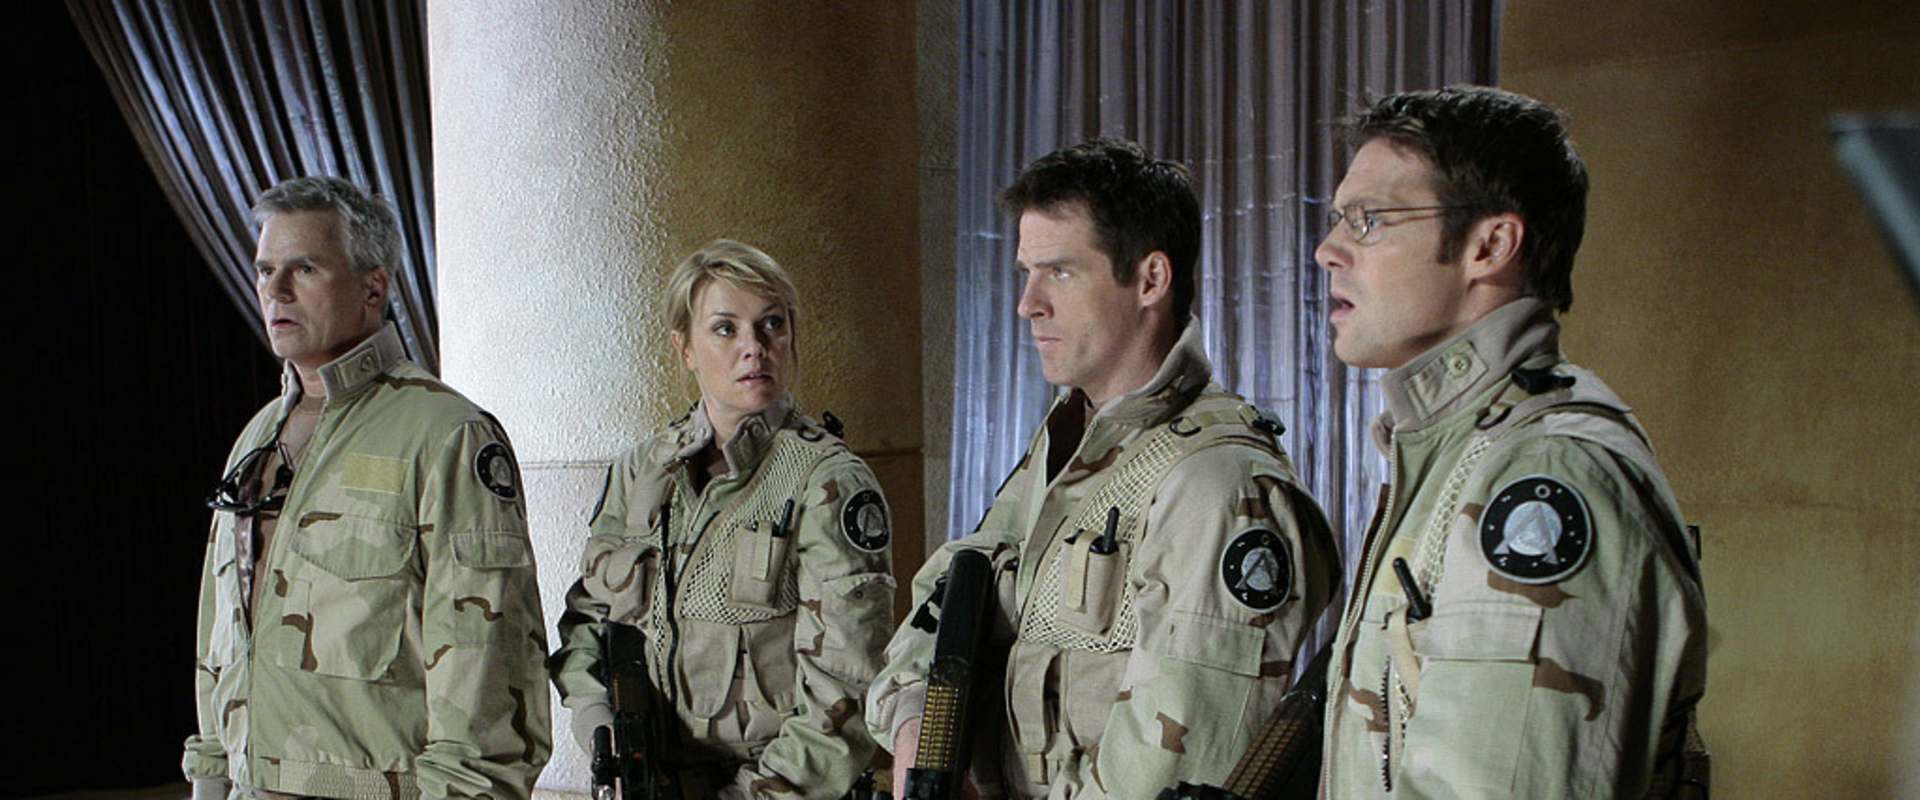 Watch Stargate Continuum On Netflix Today